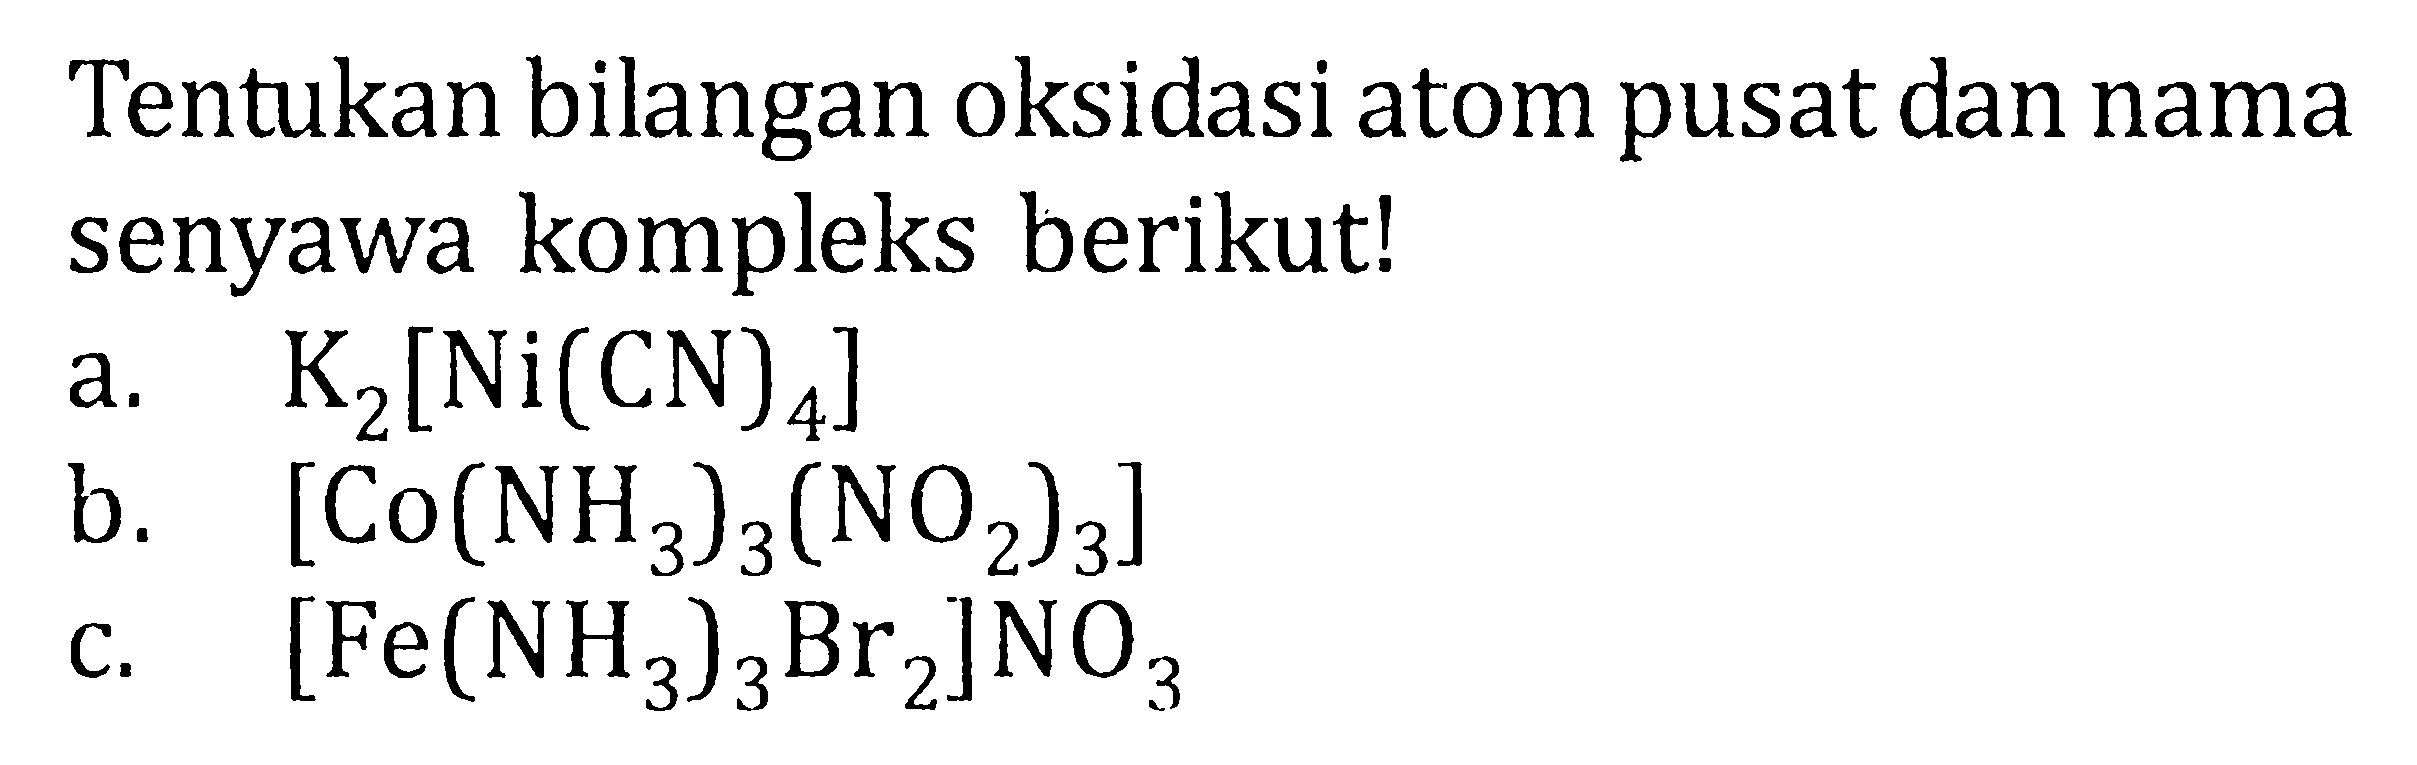 Tentukan bilangan oksidasi atom pusat dan nama senyawa kompleks berikut! a. K2[Ni(CN)4] b. [Co(NH3)3(NO2)3] c. [Fe(NH3)3Br2]NO3